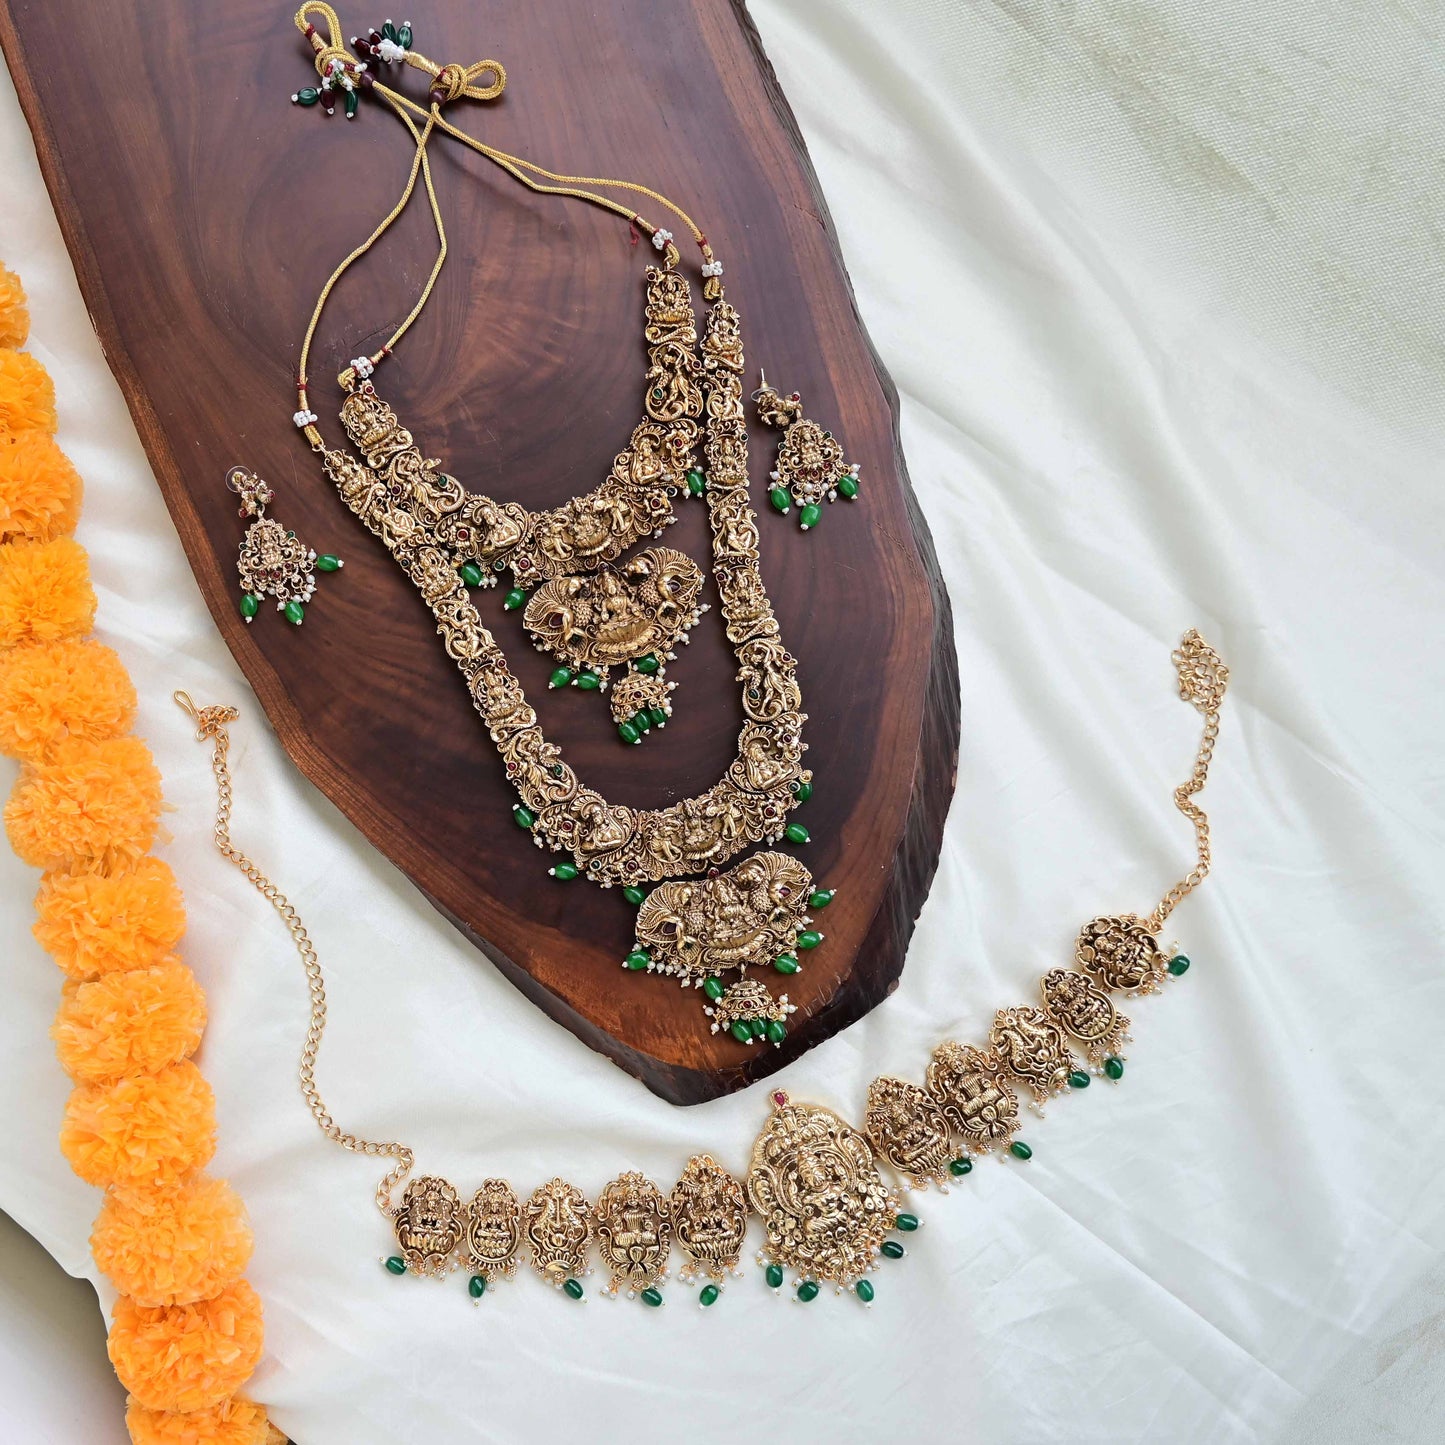 Exquisite Antique Gold Nagas Lakshmi Bridal Combo Set: Affordable and Budget-Friendly